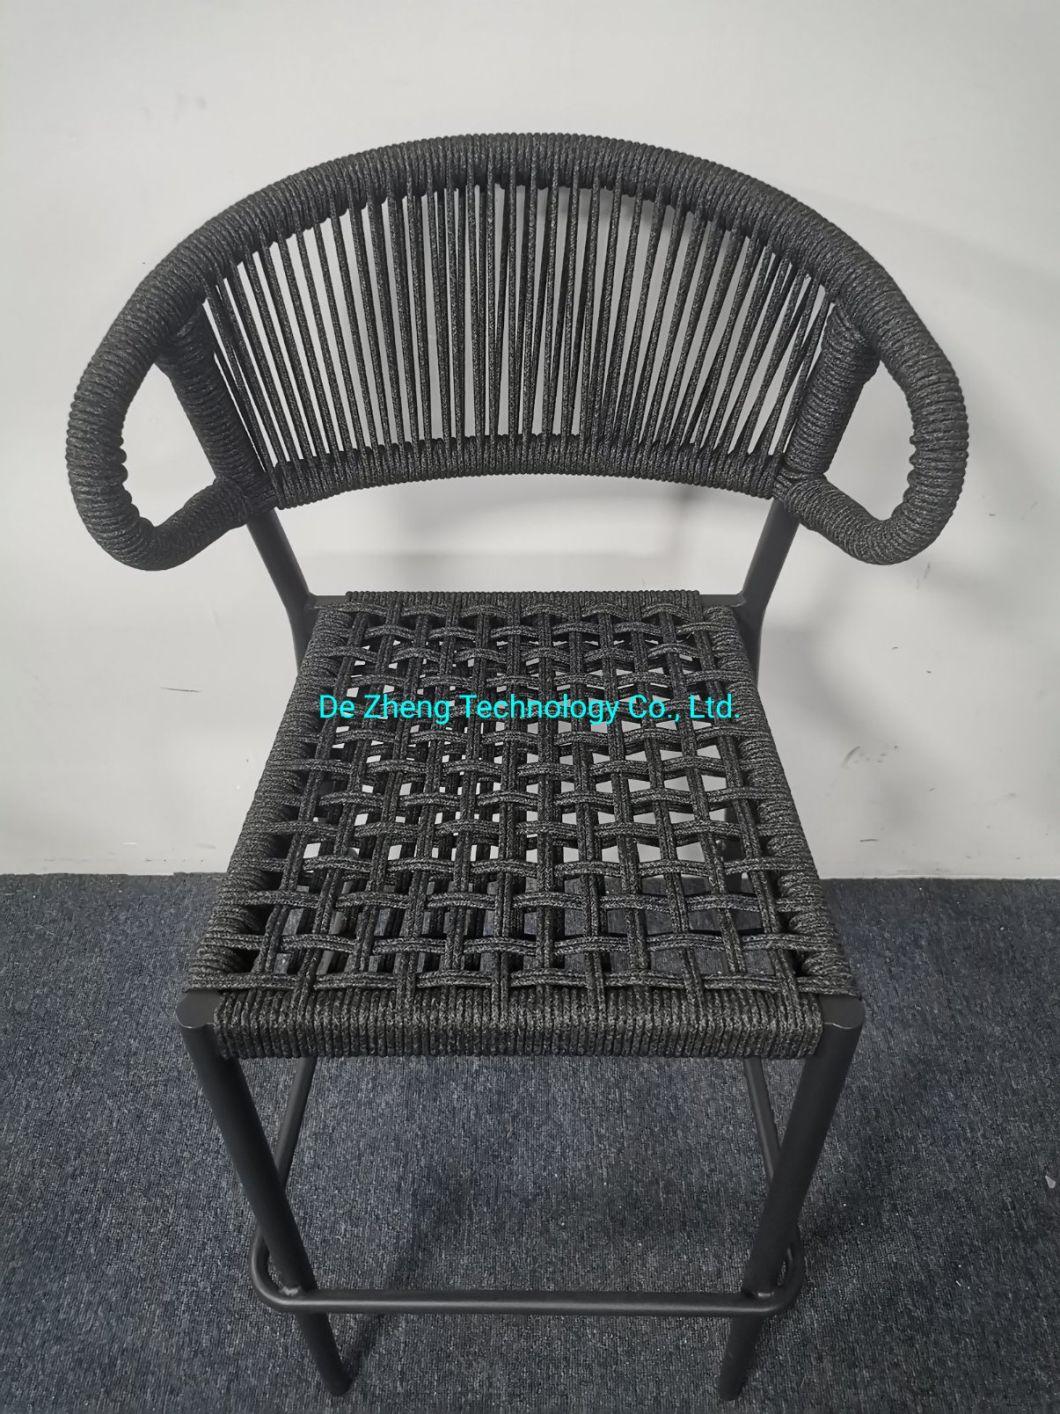 Modern Design Weaving Rope Rattan Outdoor Furniture Garden Chair and Dining Bar Chair Set